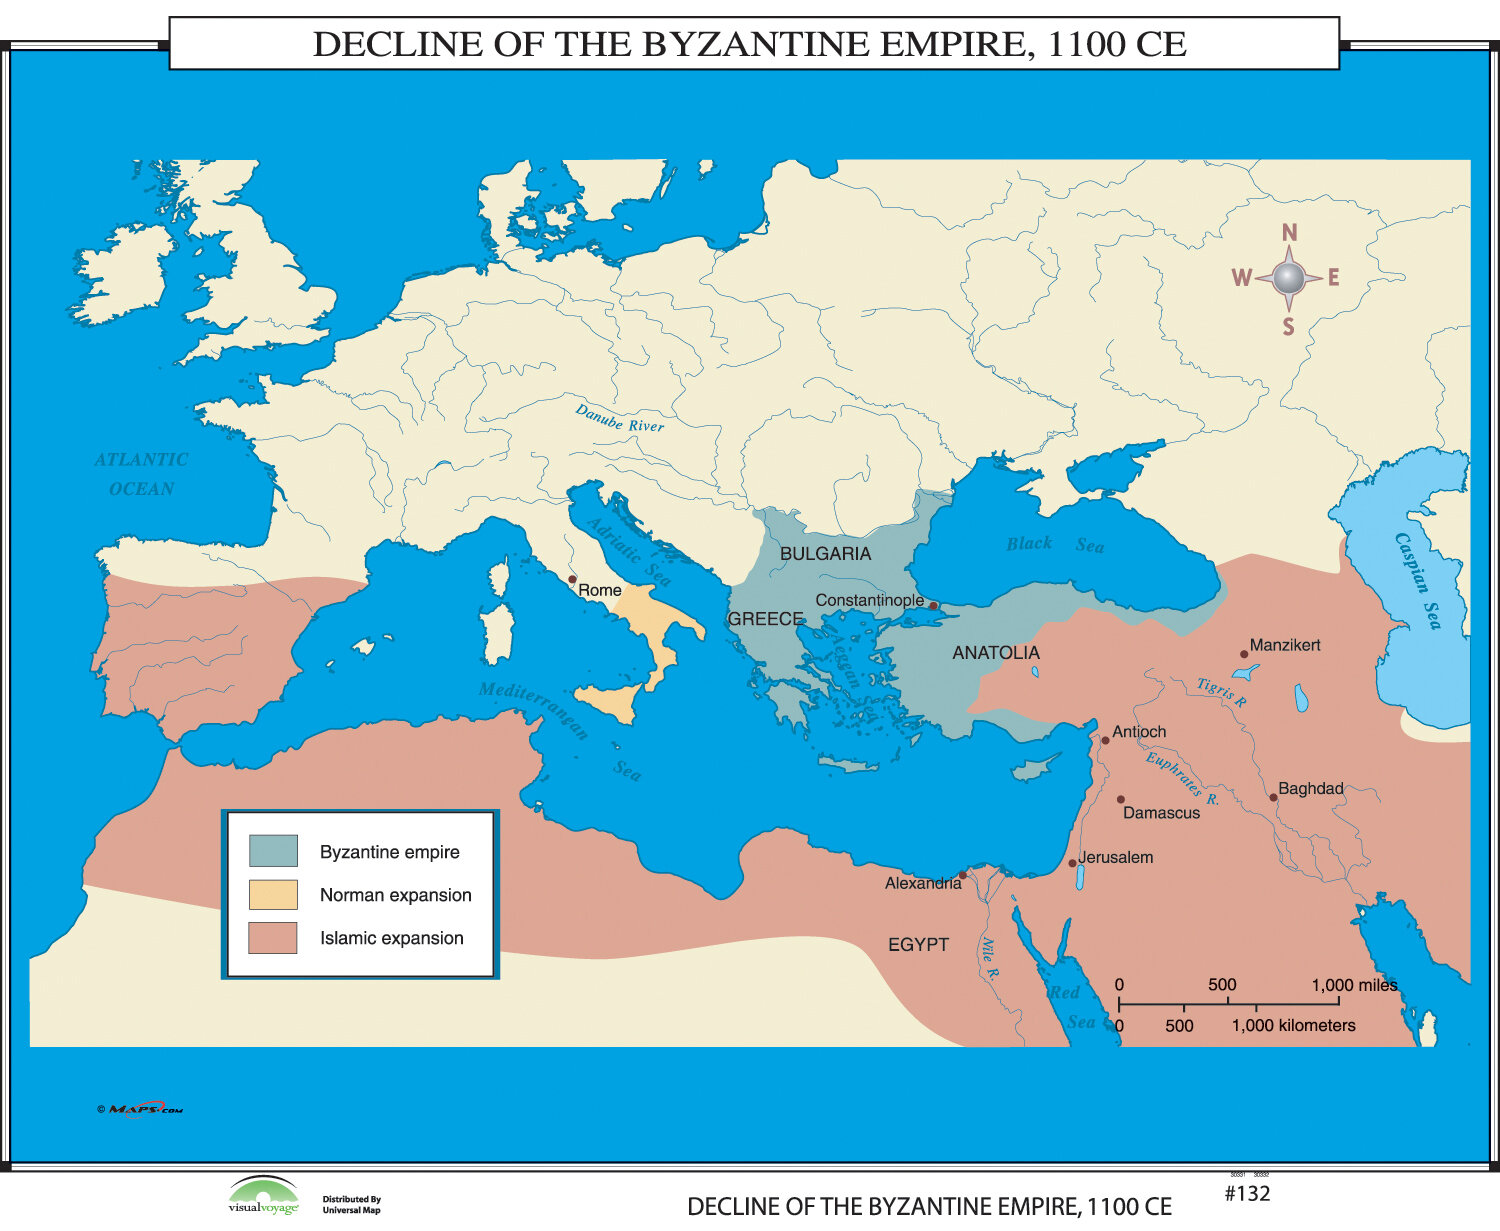 World History Wall Maps Decline Of Byzantine Empire 